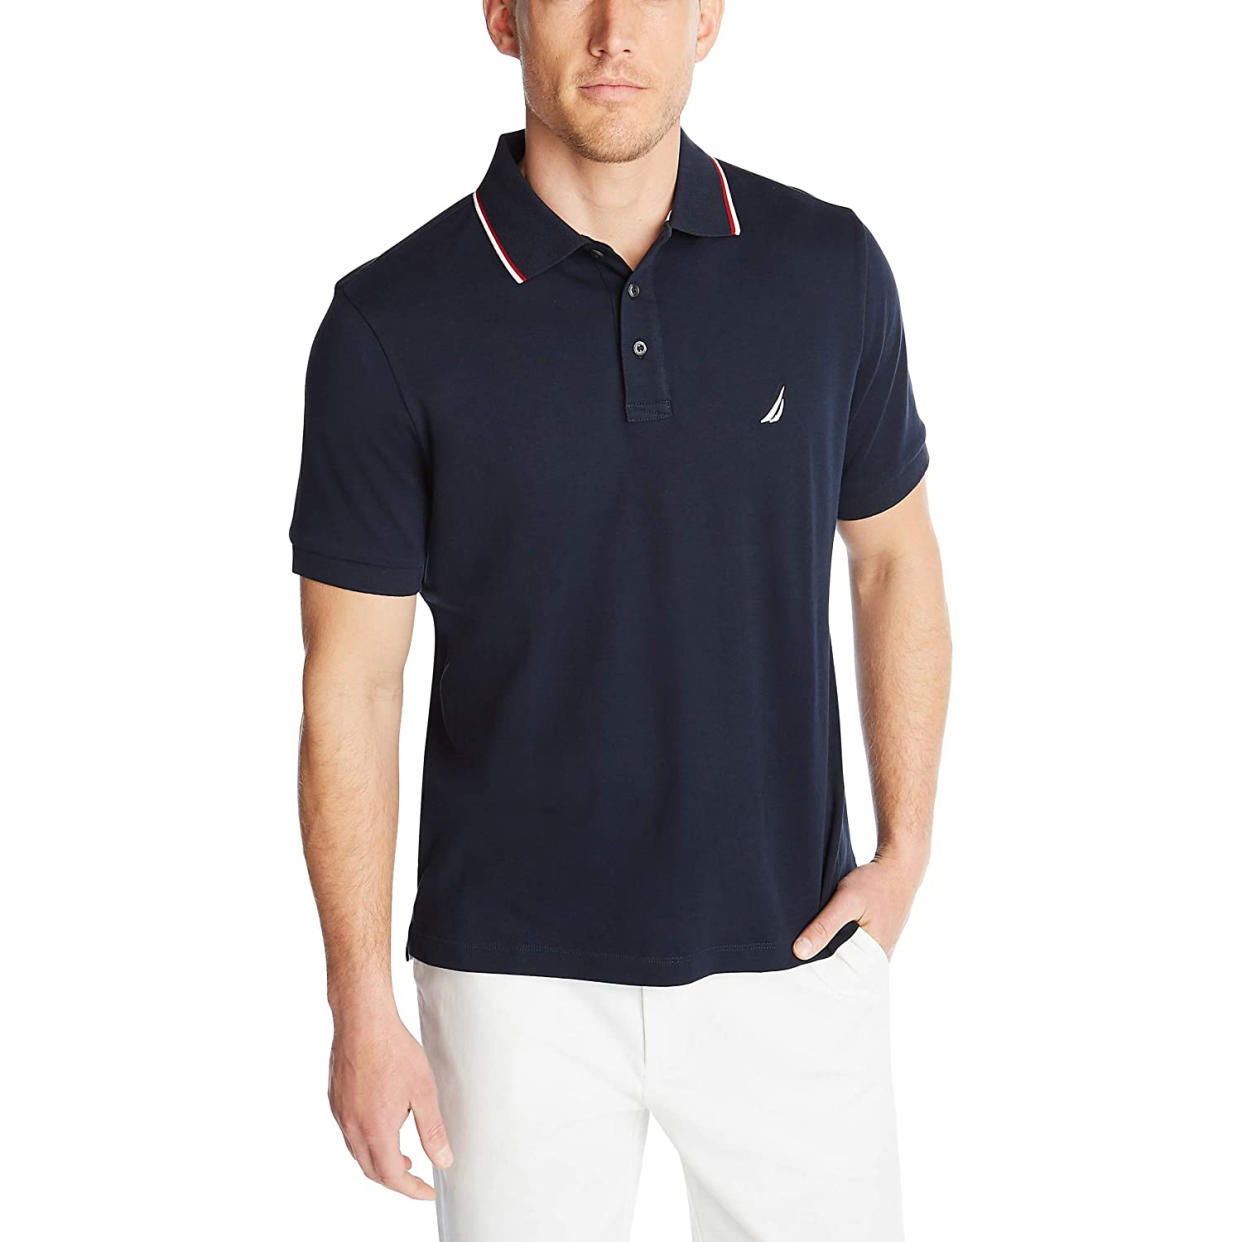 nautica men's polo shirt, best Amazon prime day deals